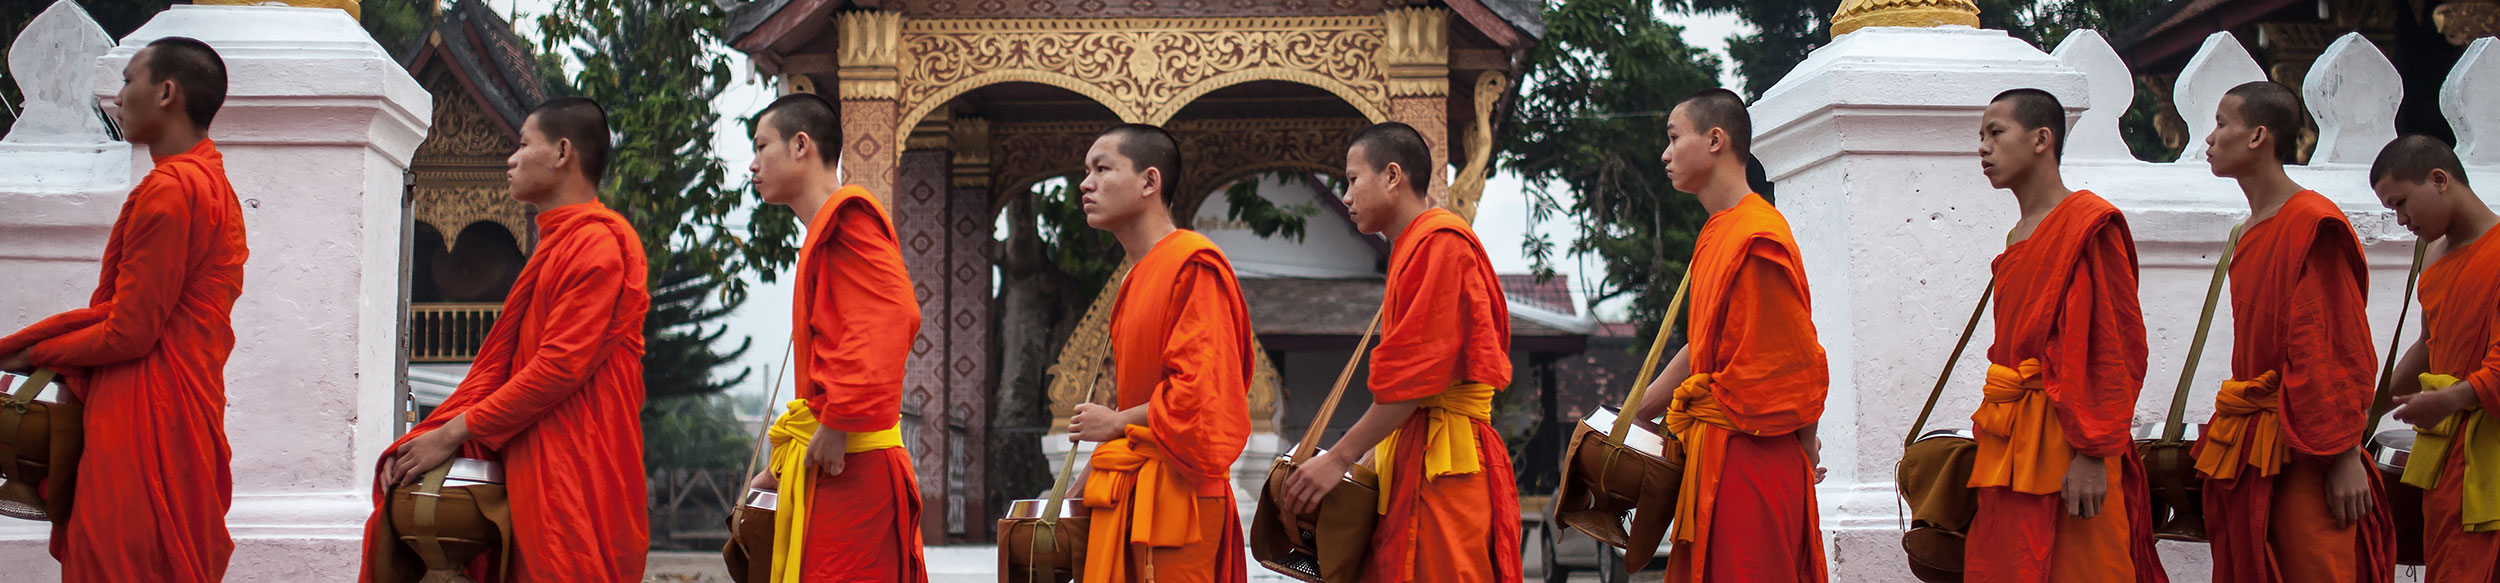 Visiter Luang Prabang avec Carnets d'Asie